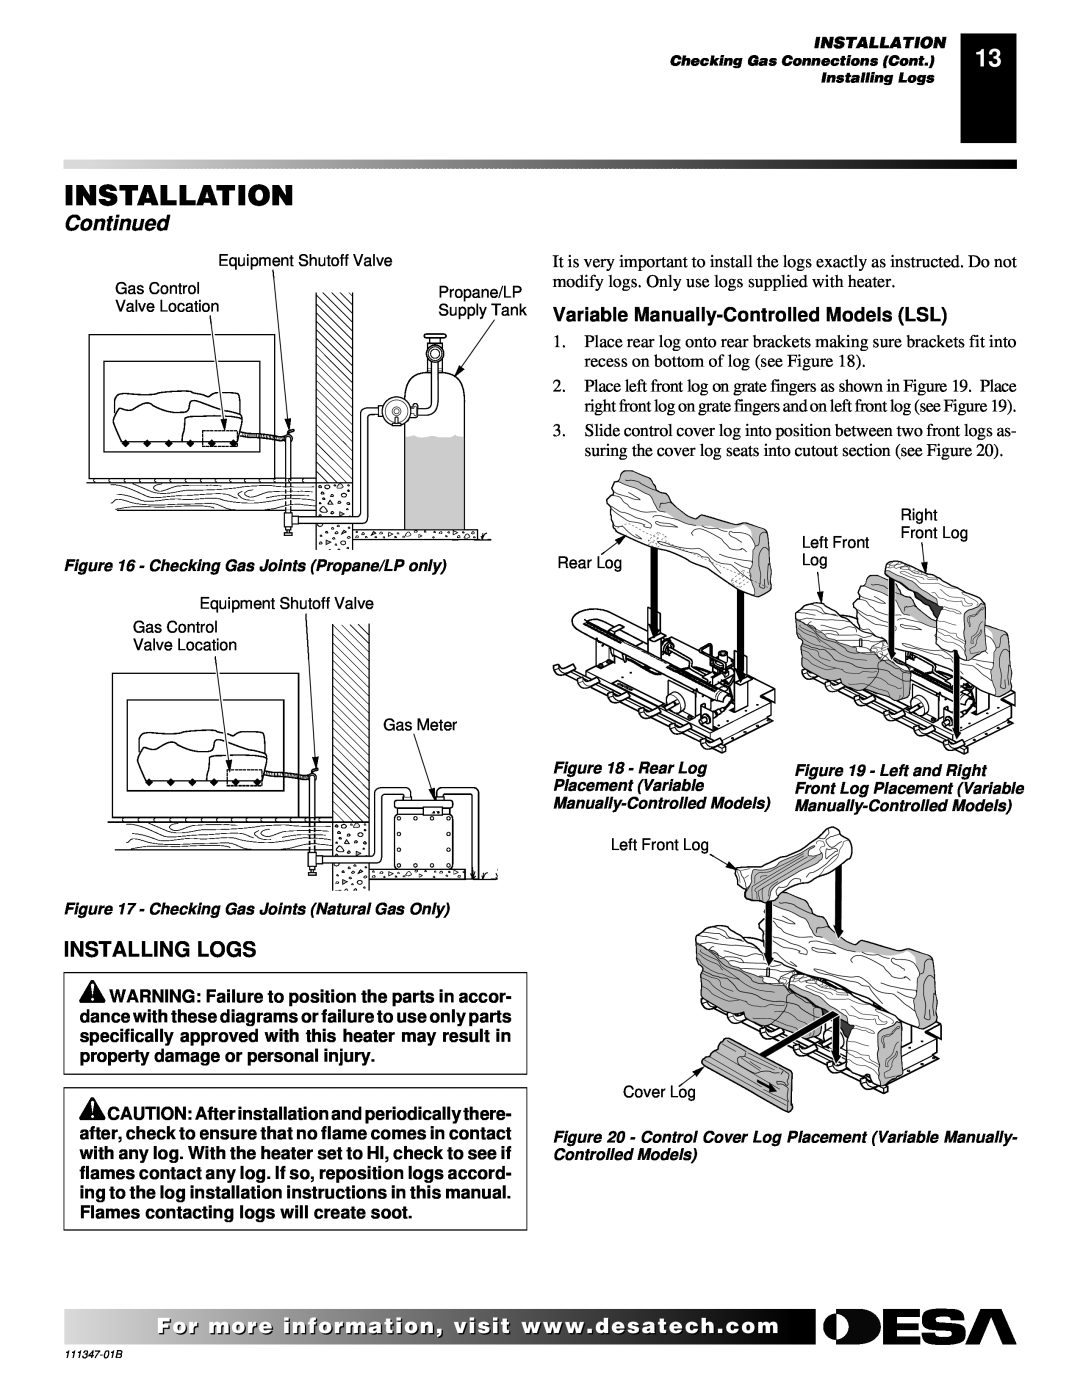 Desa LSL3124N installation manual Installing Logs, Variable Manually-ControlledModels LSL, Installation, Continued 